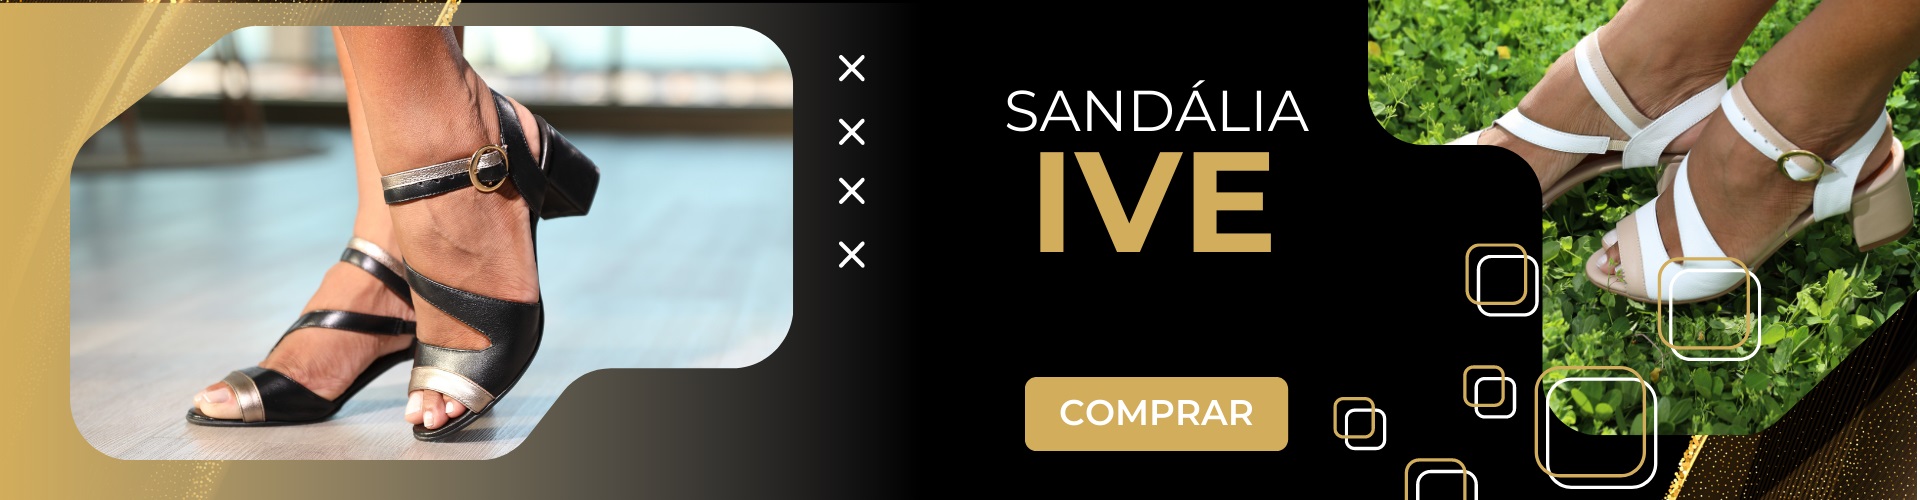 Sandália Ive